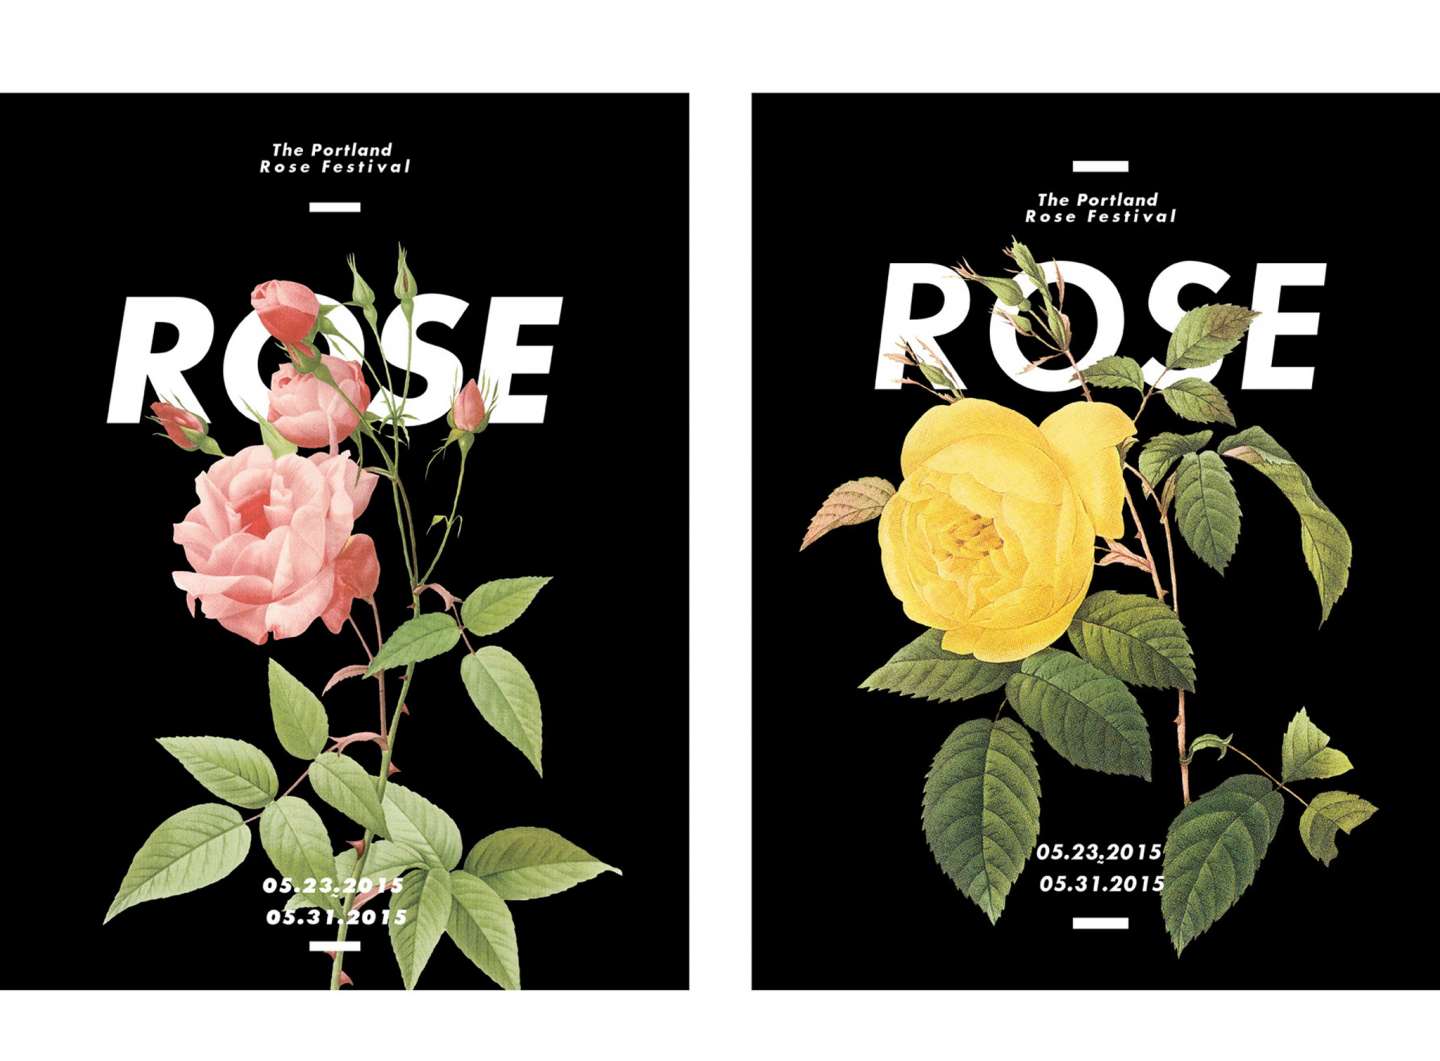 The Portland Rose Festival